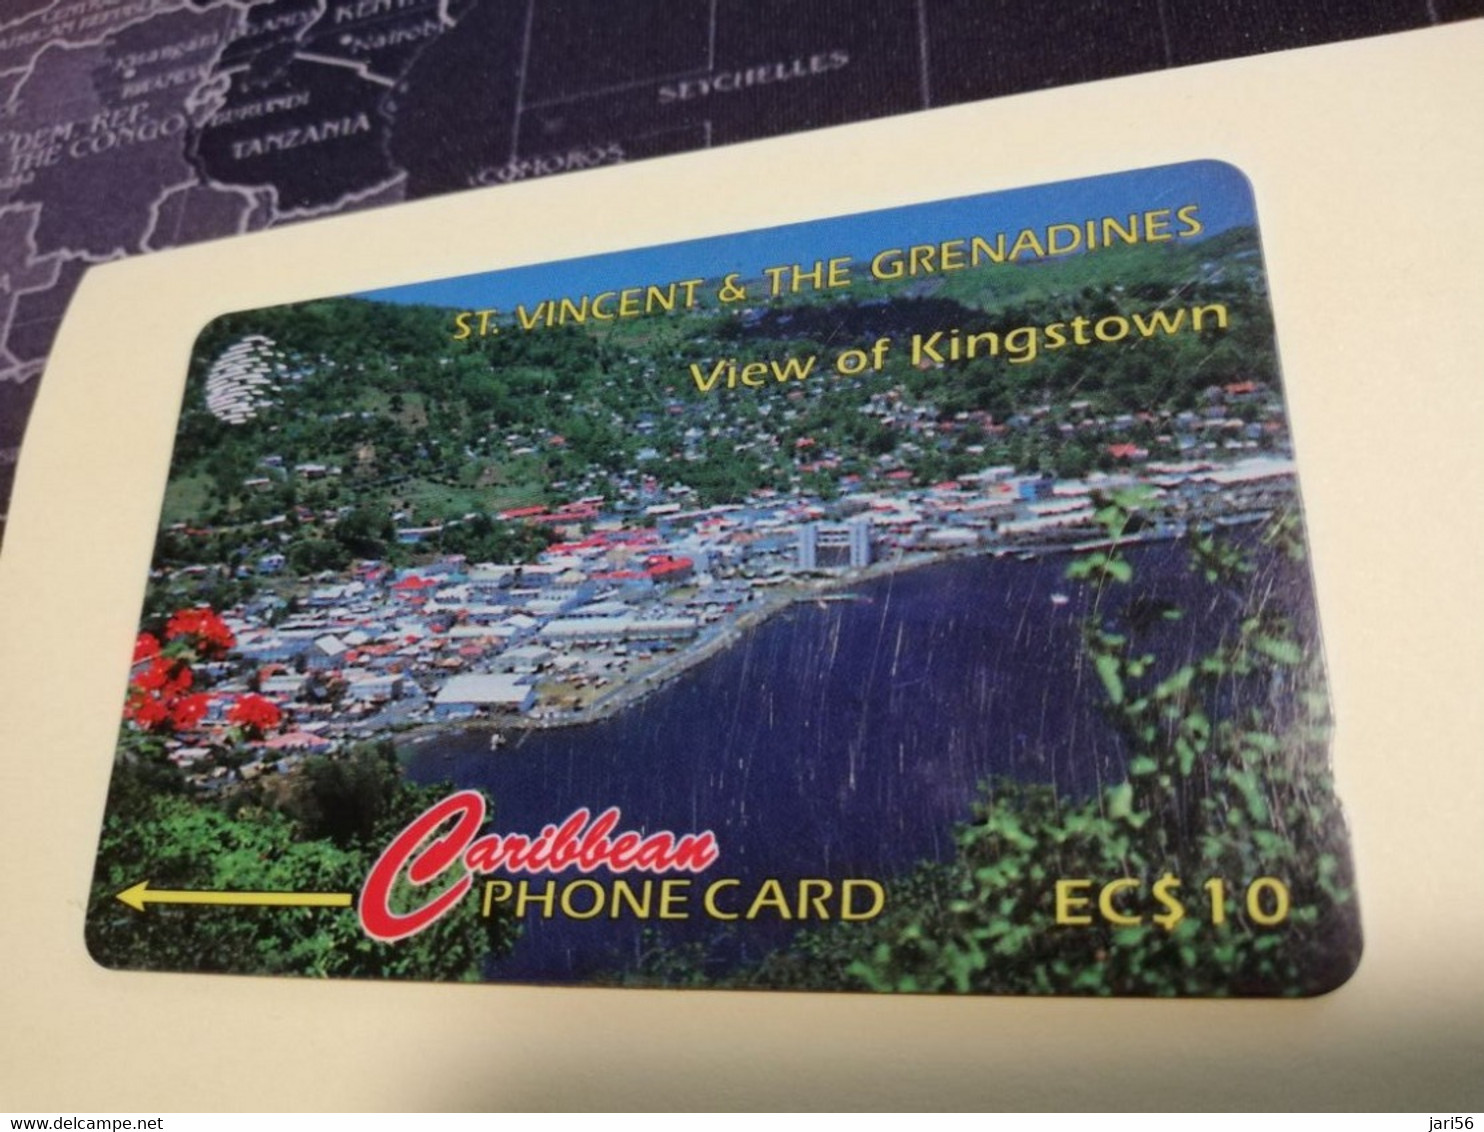 ST VINCENT & GRENADINES  GPT CARD   $ 10,- 13CSVB  VIEW OF KINGSTOWN            C&W    Fine Used  Card  **3372** - St. Vincent & The Grenadines